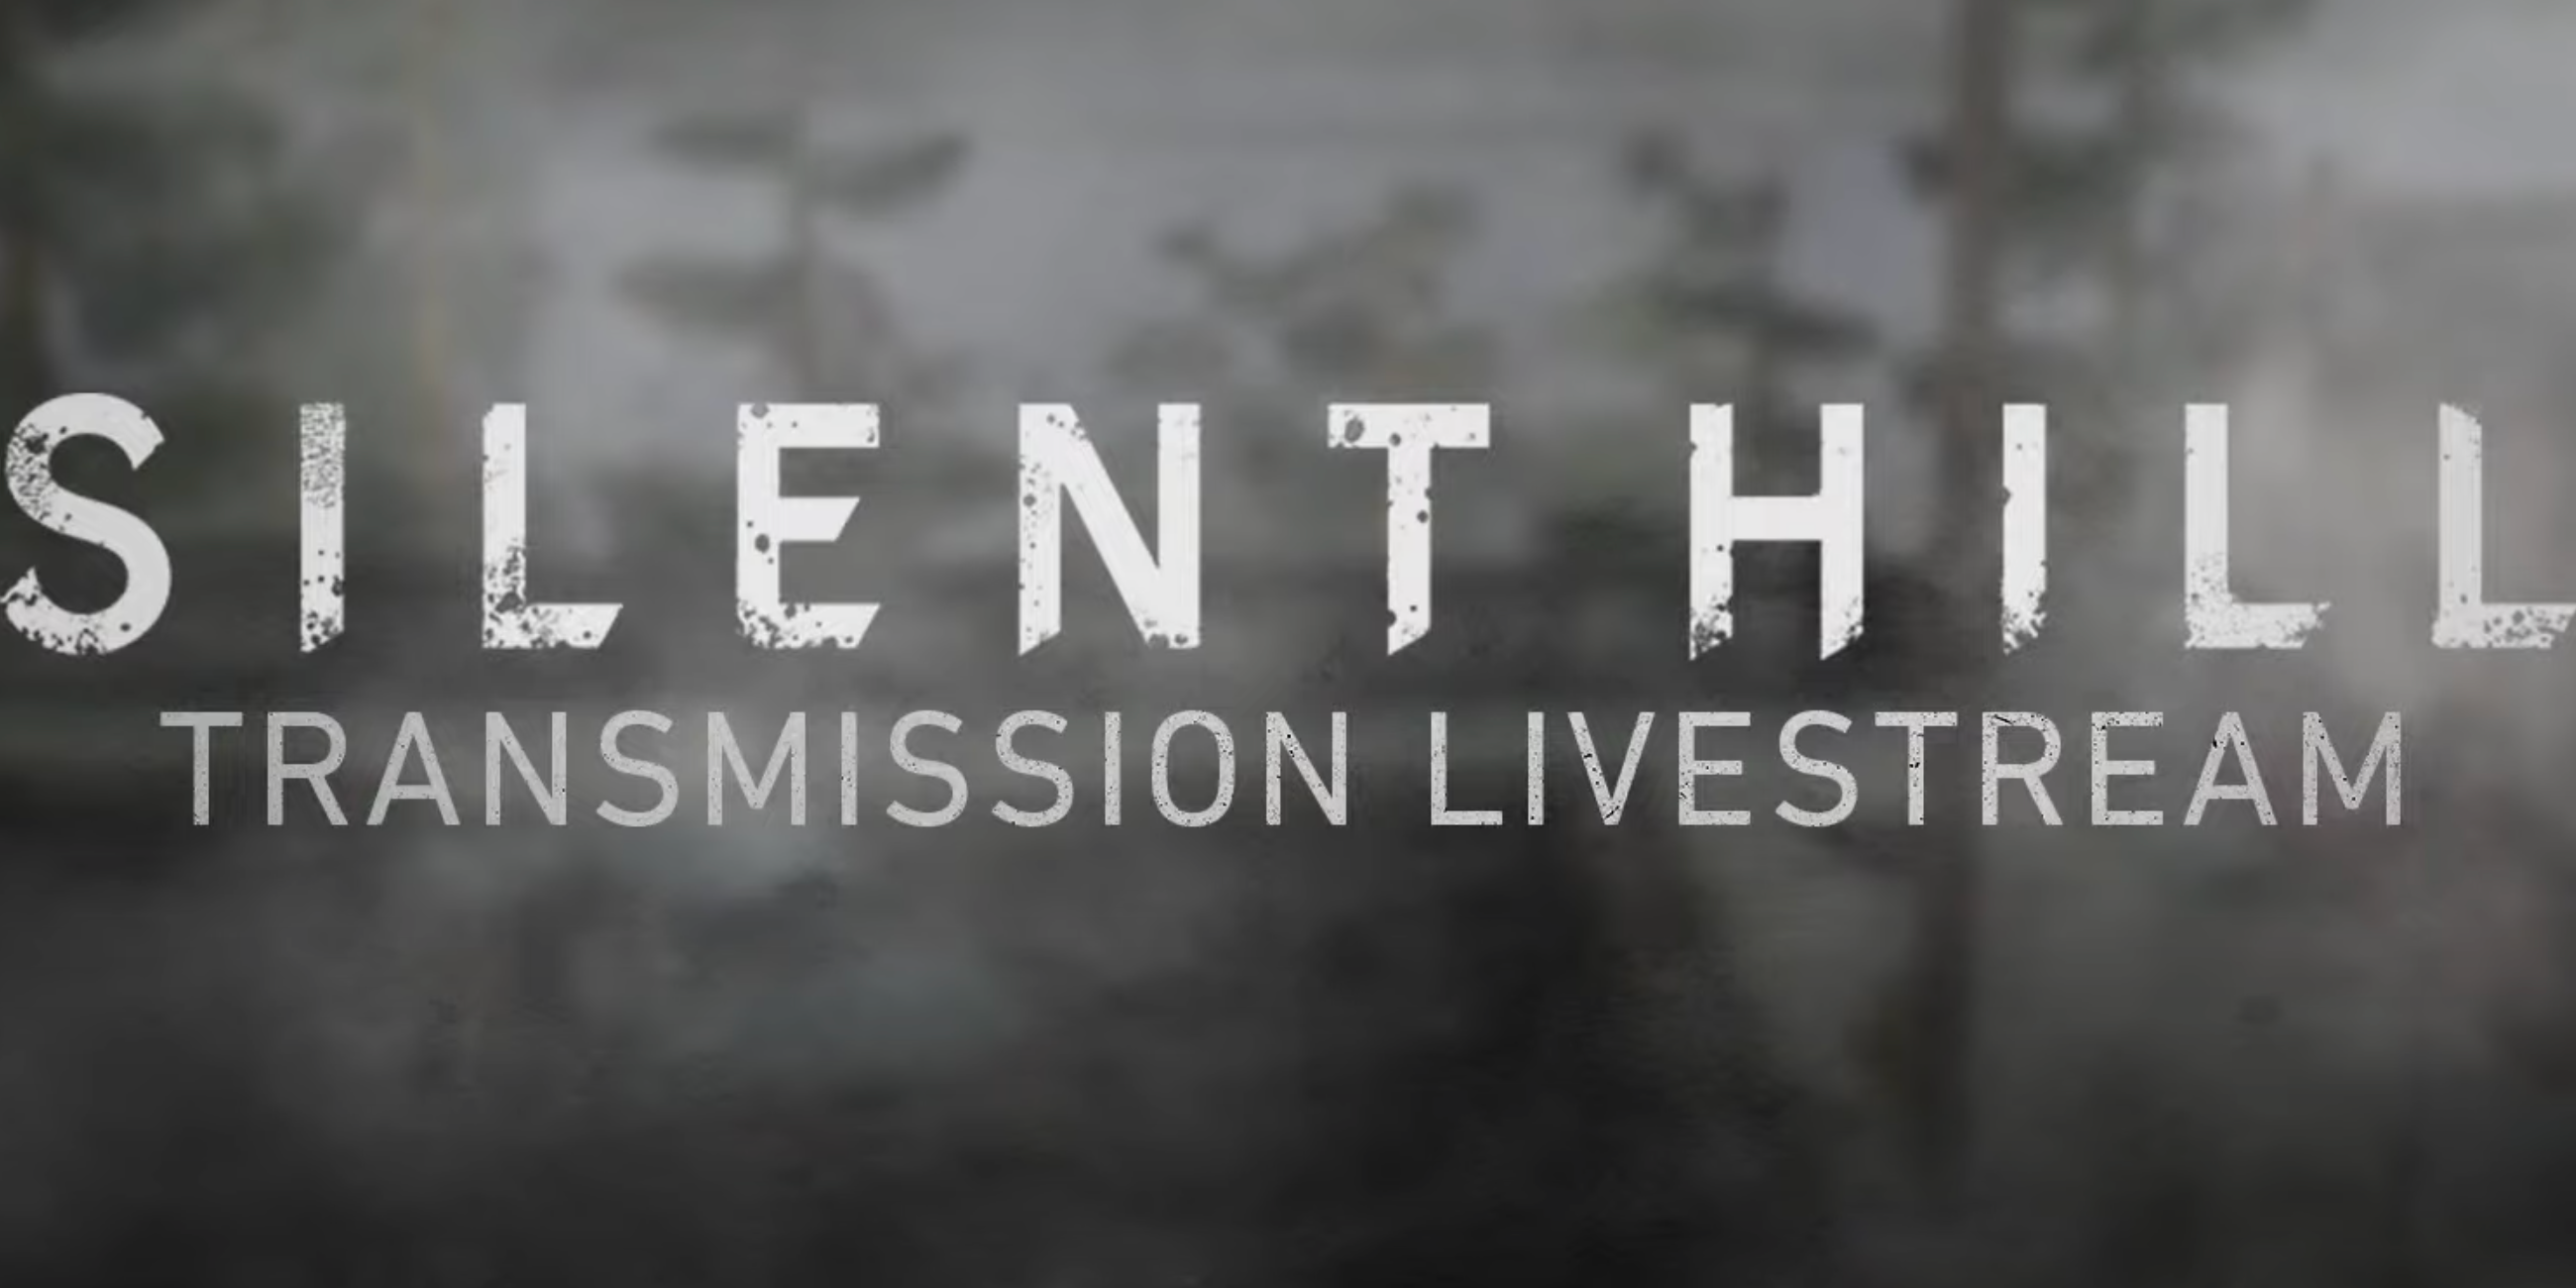 Silent Hill Transmission Livestream banner